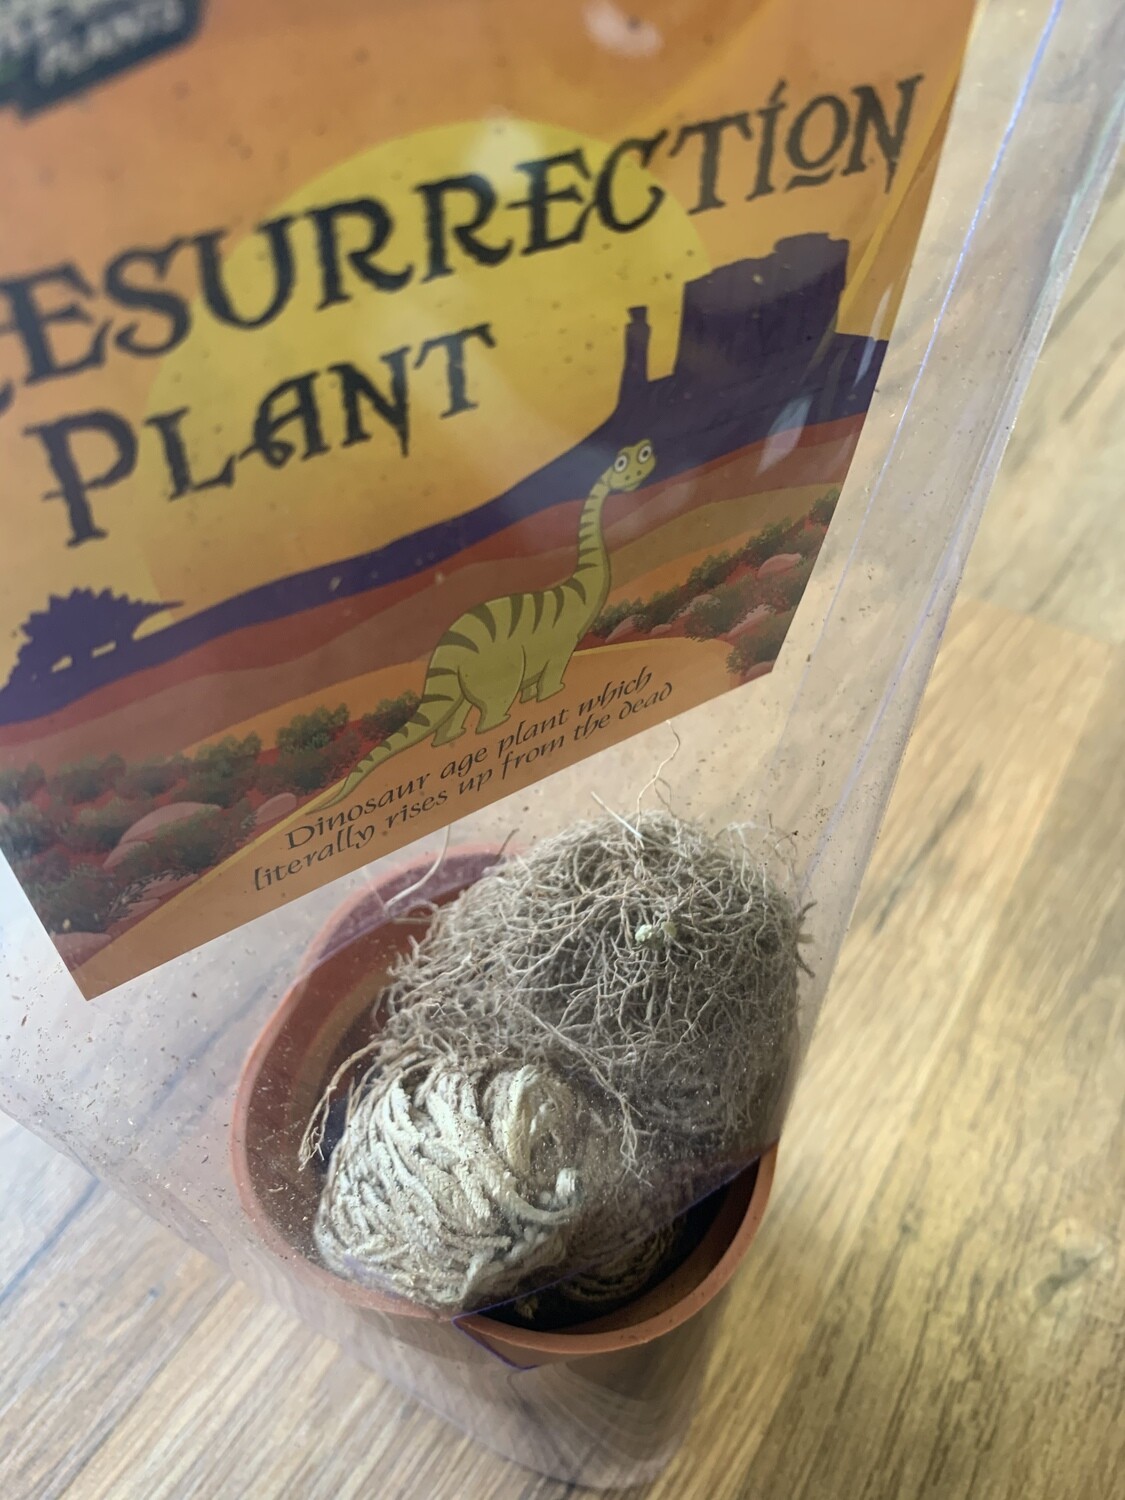 Resurrection Plant